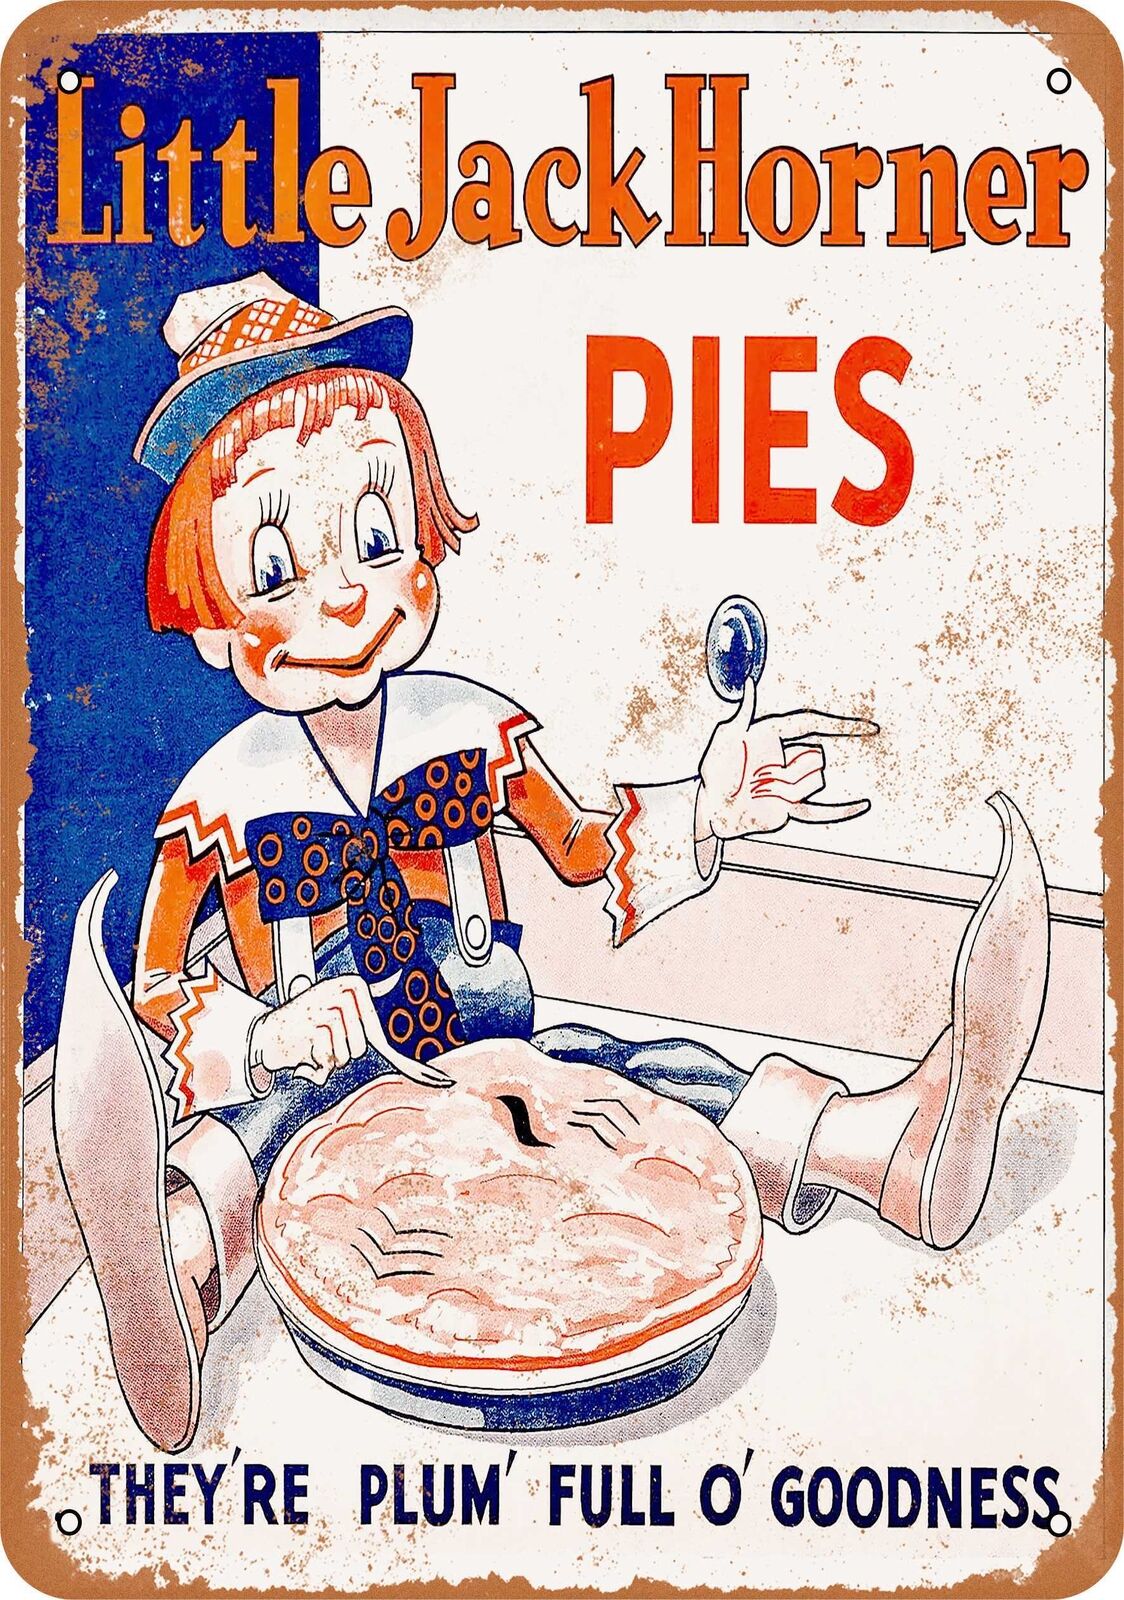 Metal Sign - 1946 Little Jack Horner Pies - Vintage Look Reproduction